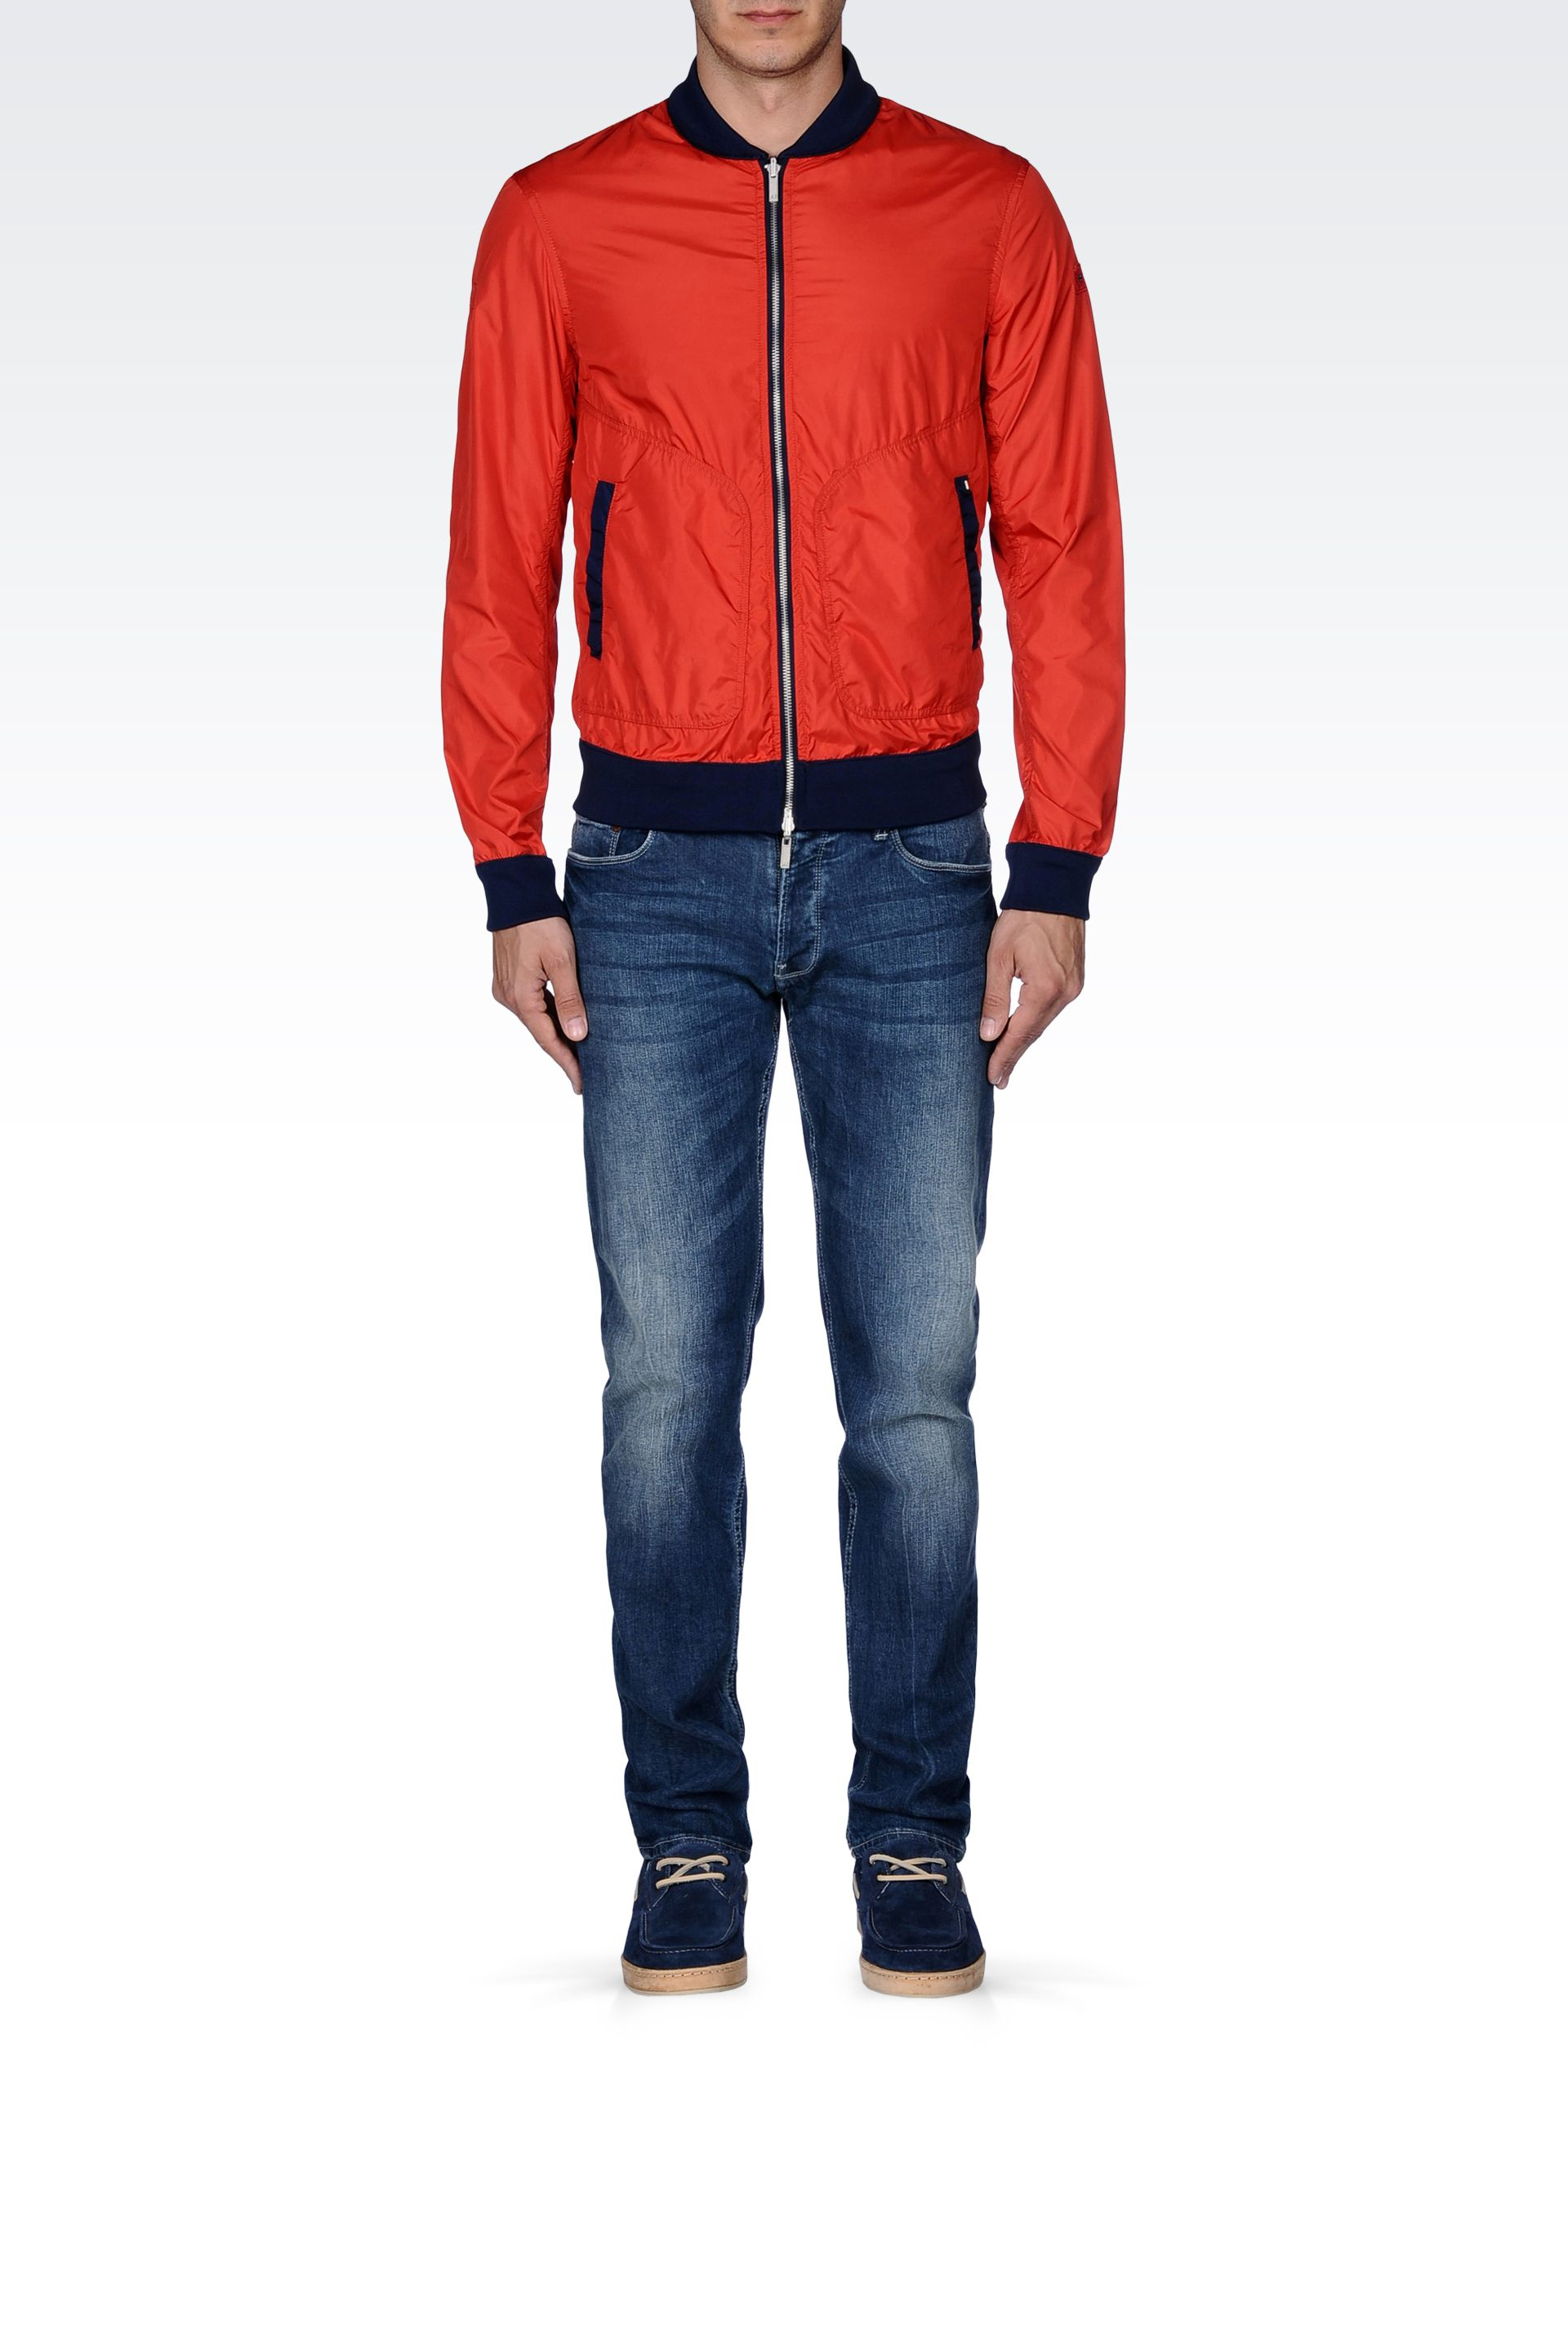 Armani Jeans Bomber Jacket in Orange for Men | Lyst